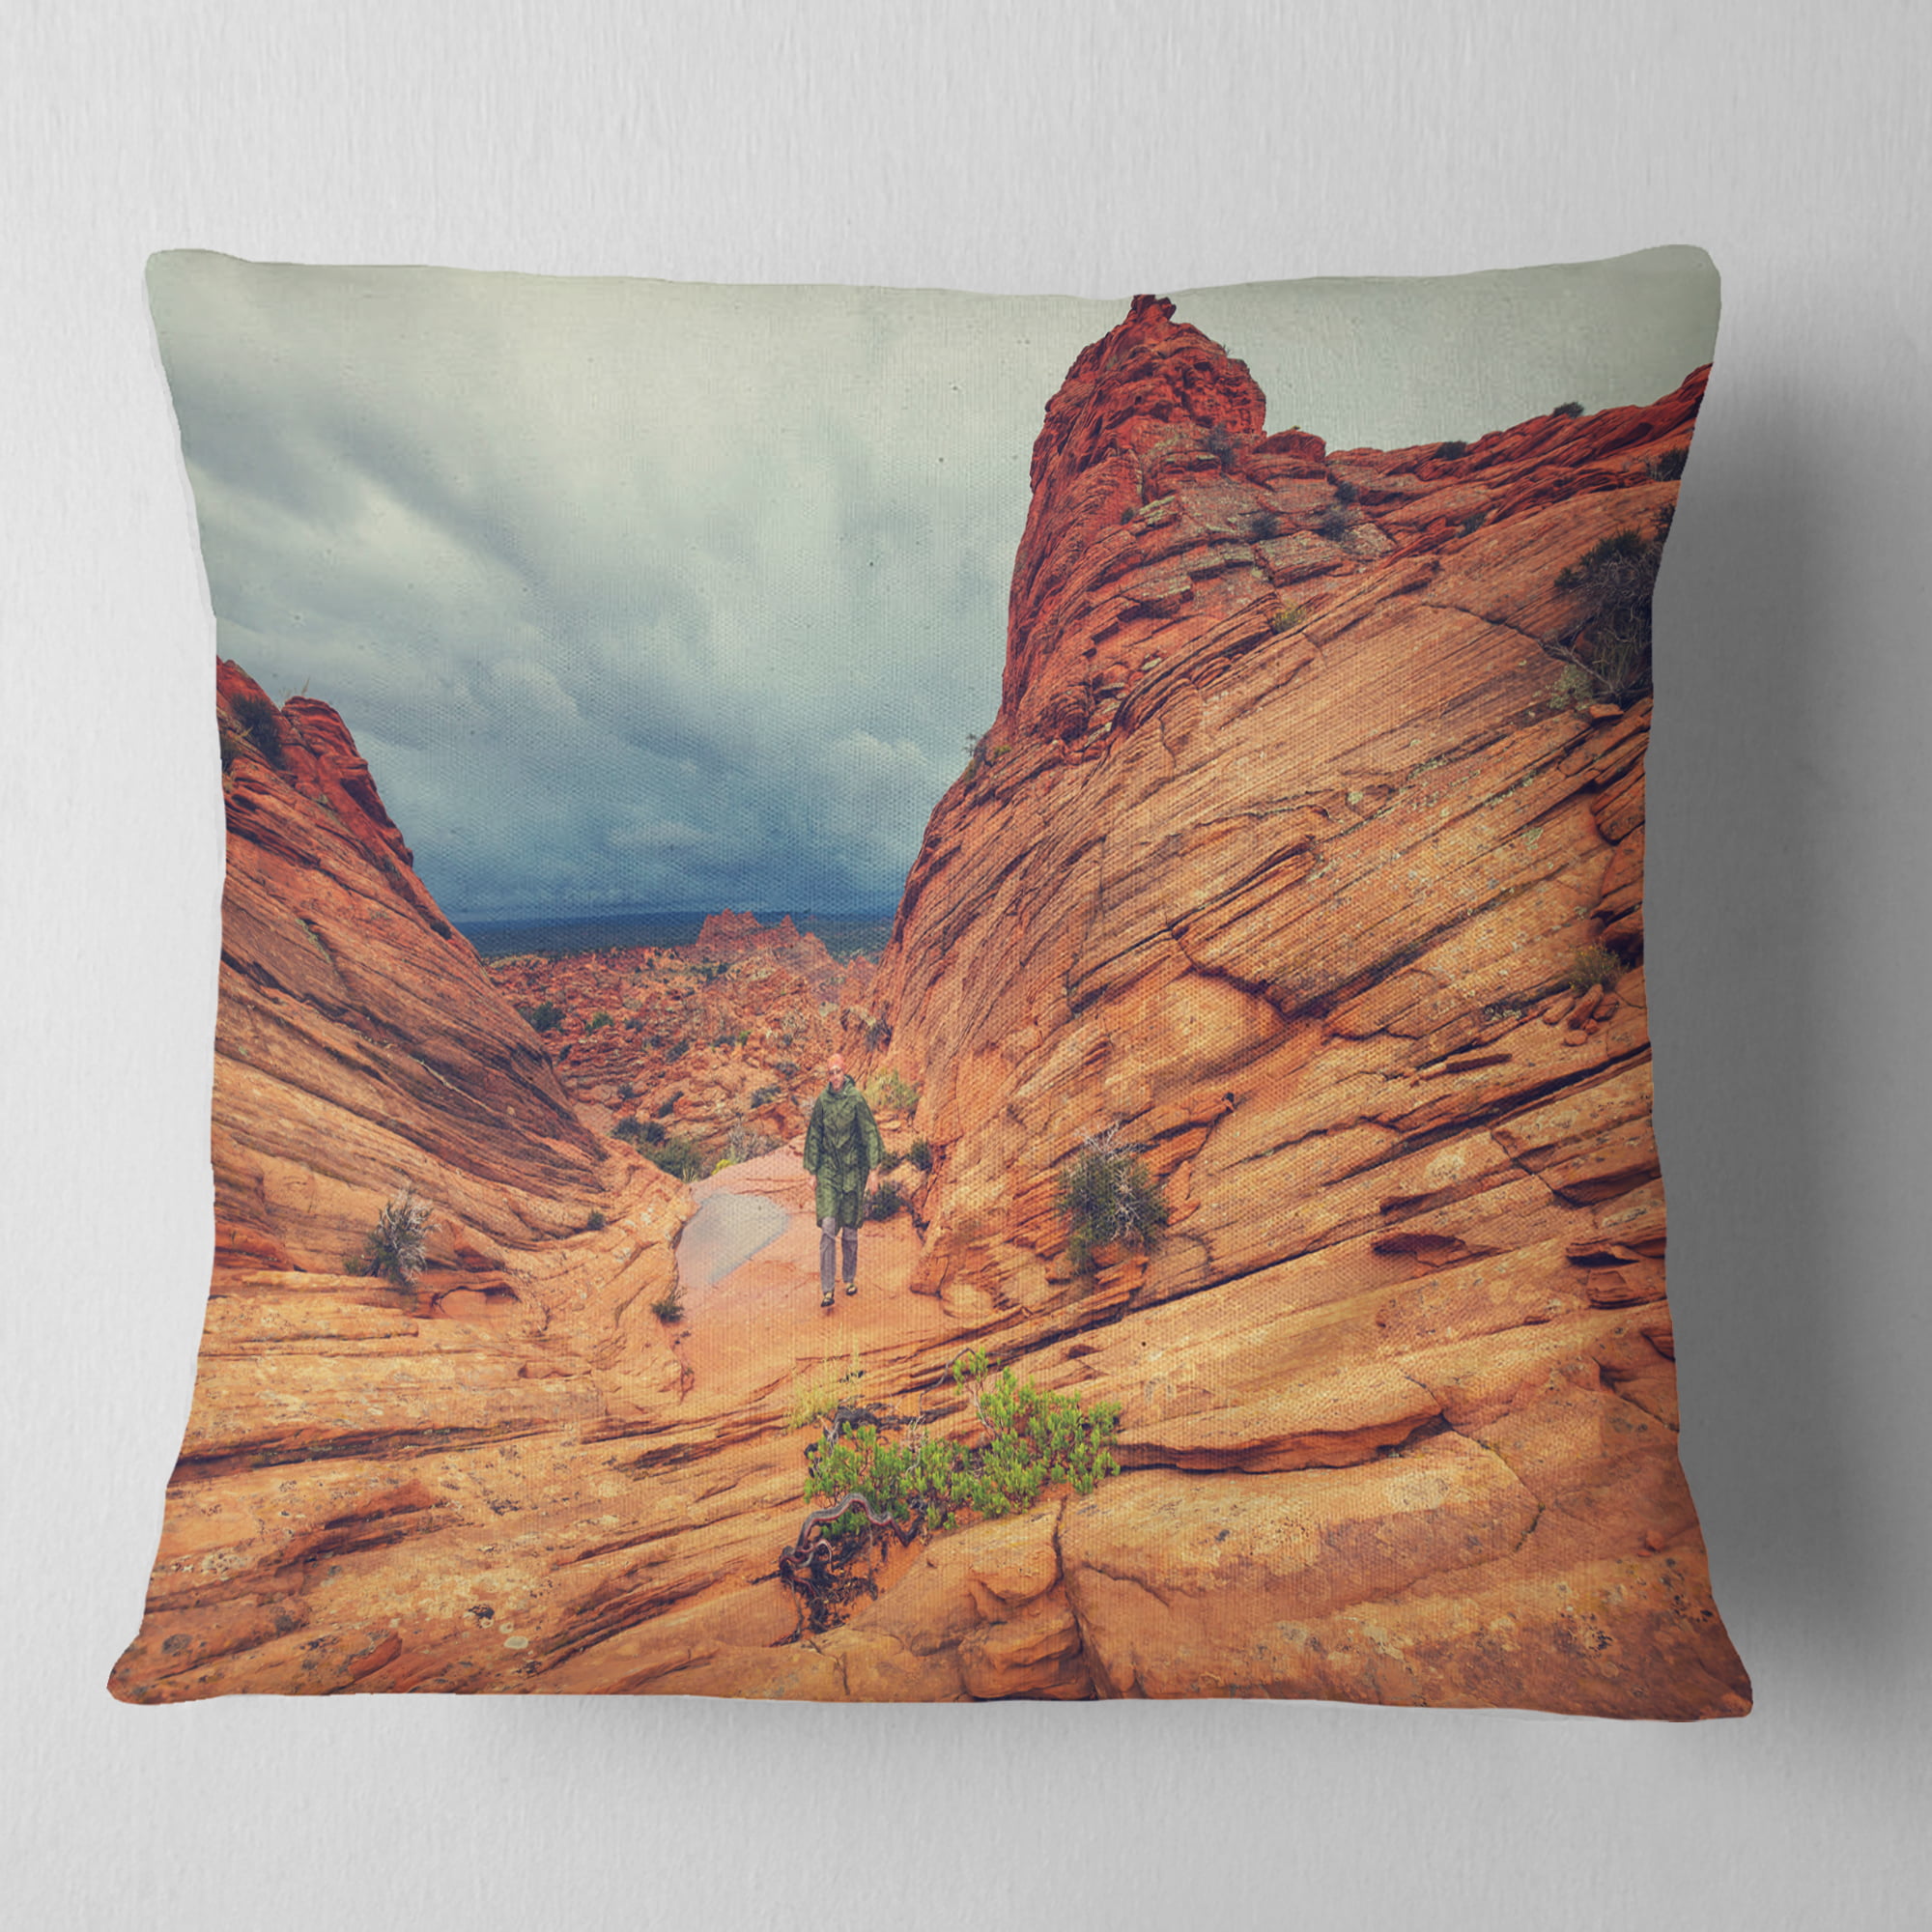 Designart CU12247-16-16 Wild Vermillion Cliffs Utah Landscape Printed Cushion Cover for Living Room Sofa Throw Pillow 16 x 16